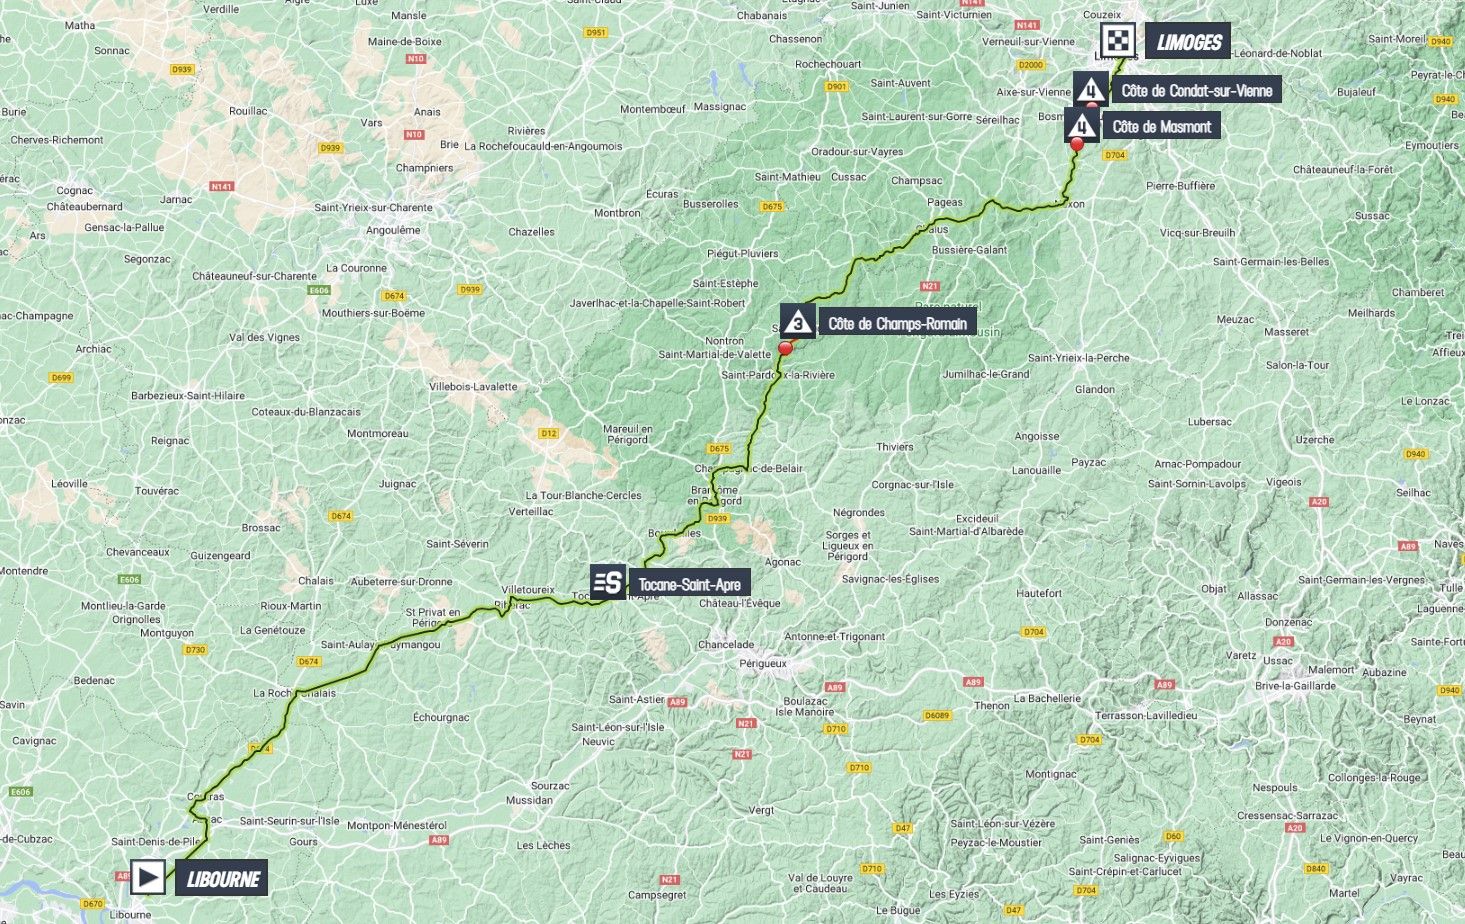 PREVIEW | Tour de France 2023 stage 8 - Van Aert and van der Poel favourites for hilly sprint